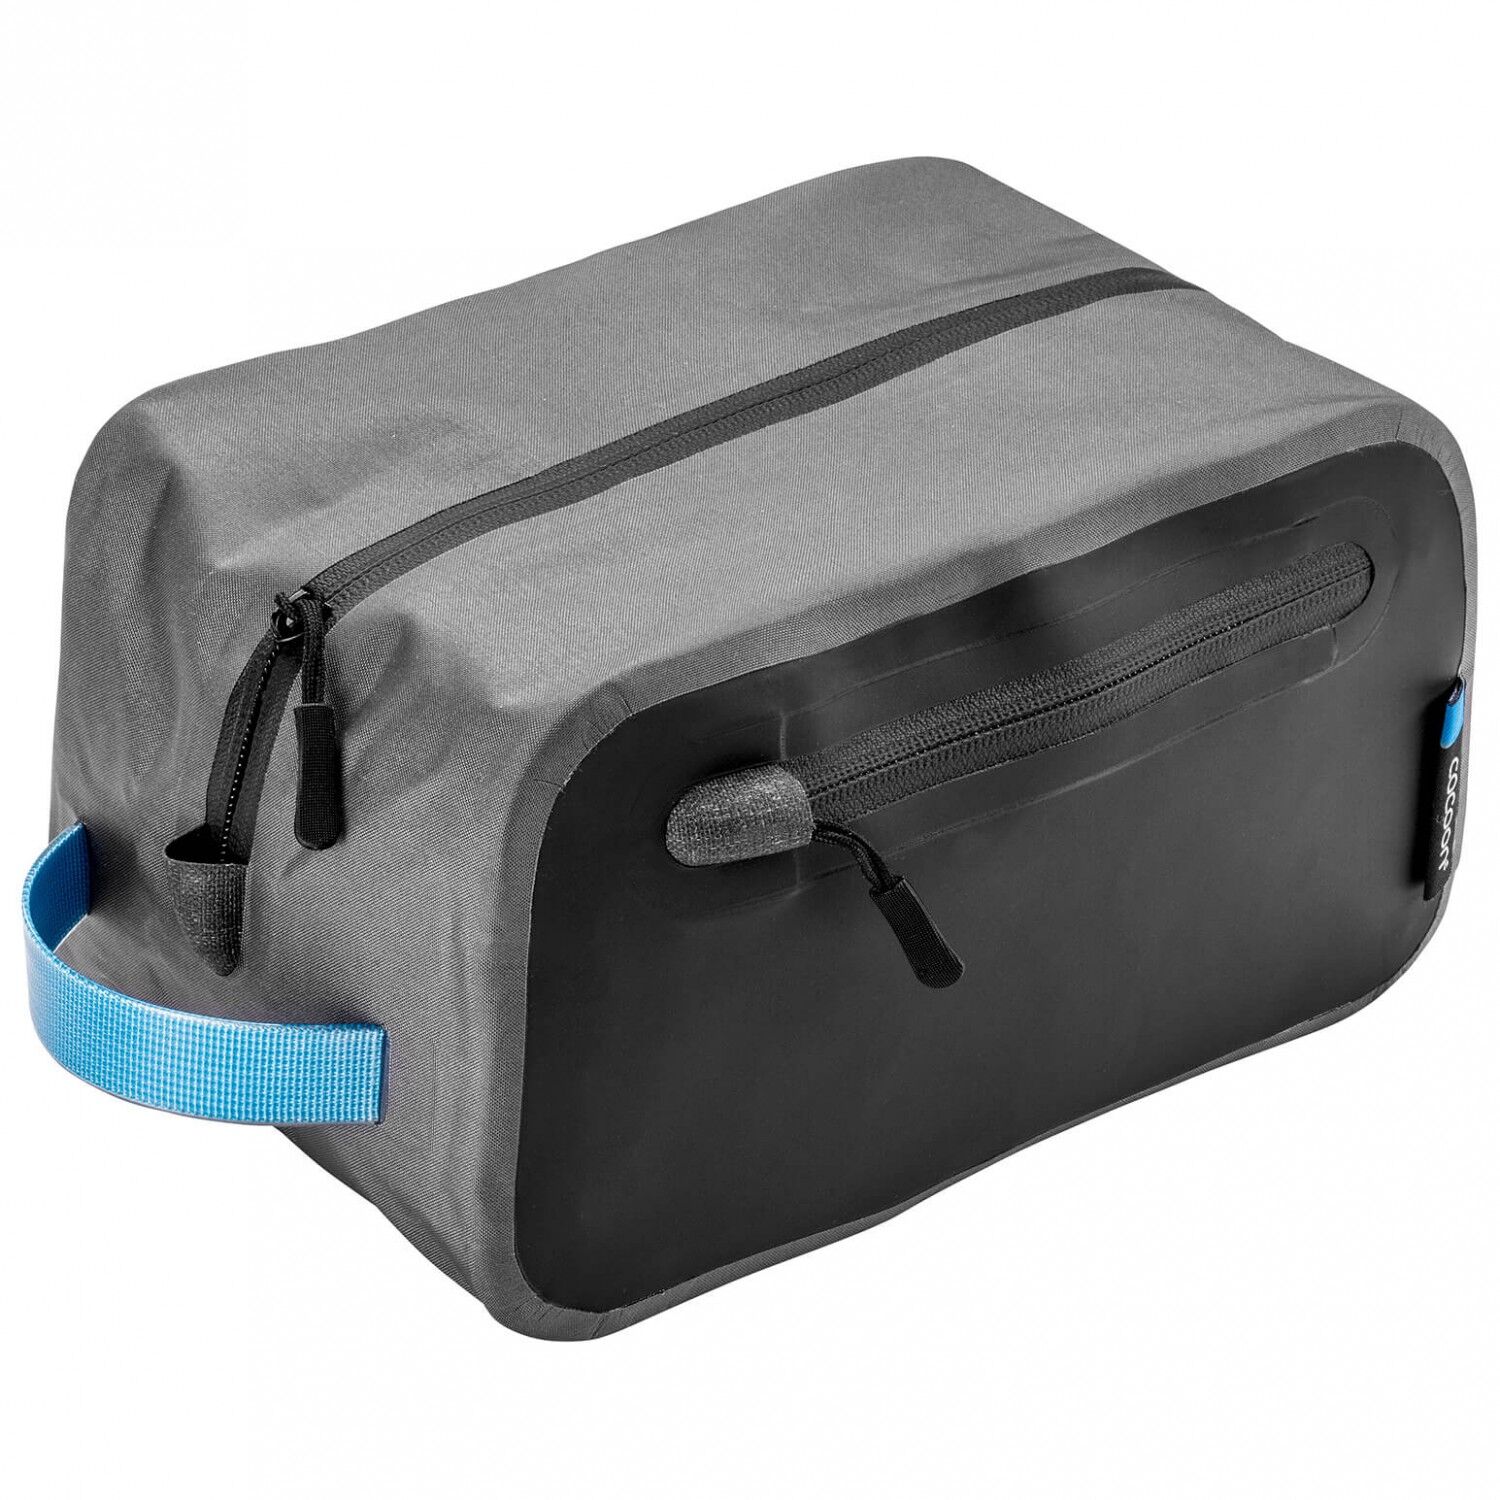 Cocoon Toiletry Kit Cube - Travel handbag